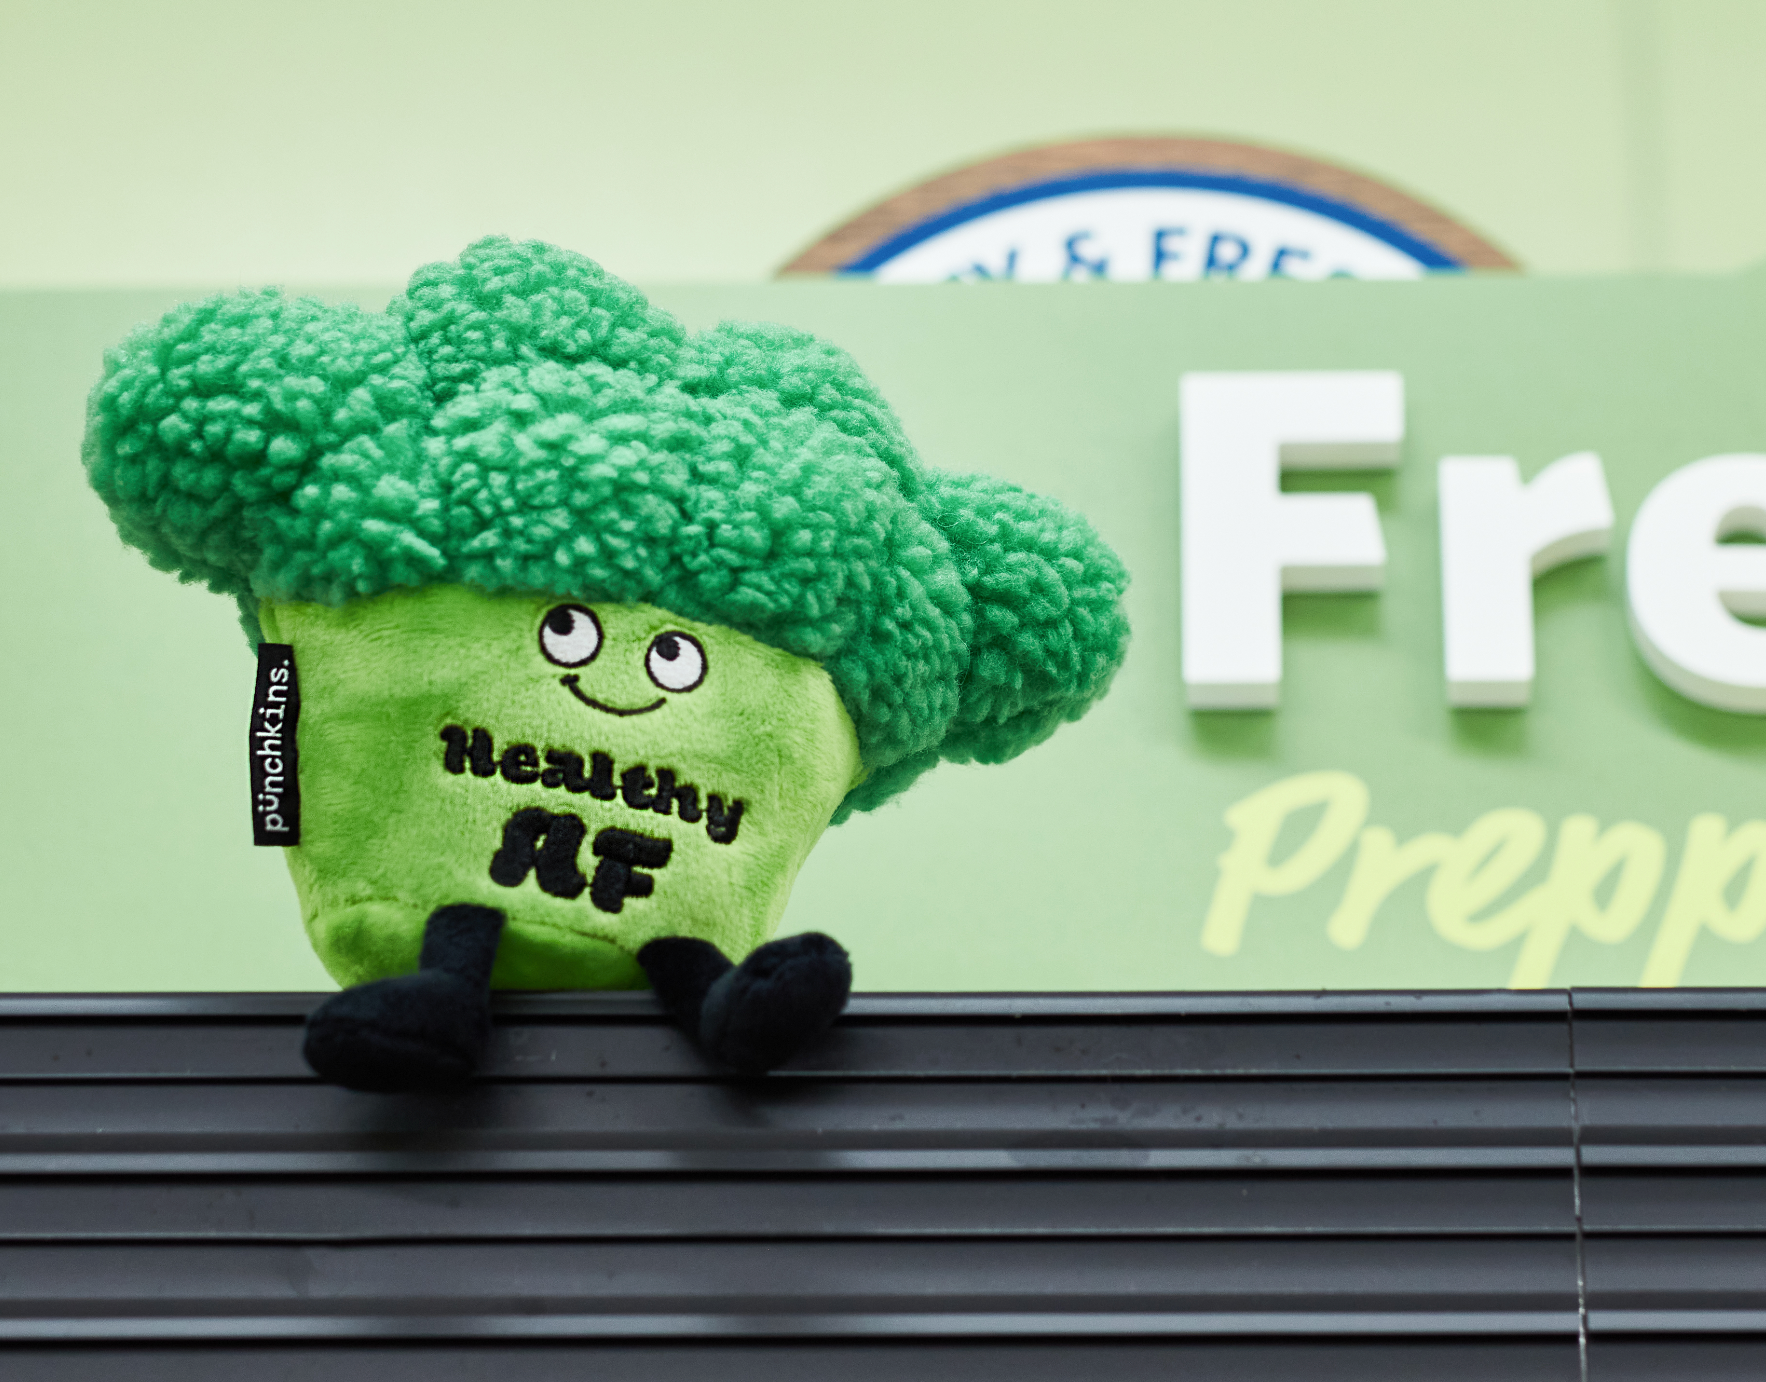 &quot;Healthy AF&quot; Plush Broccoli